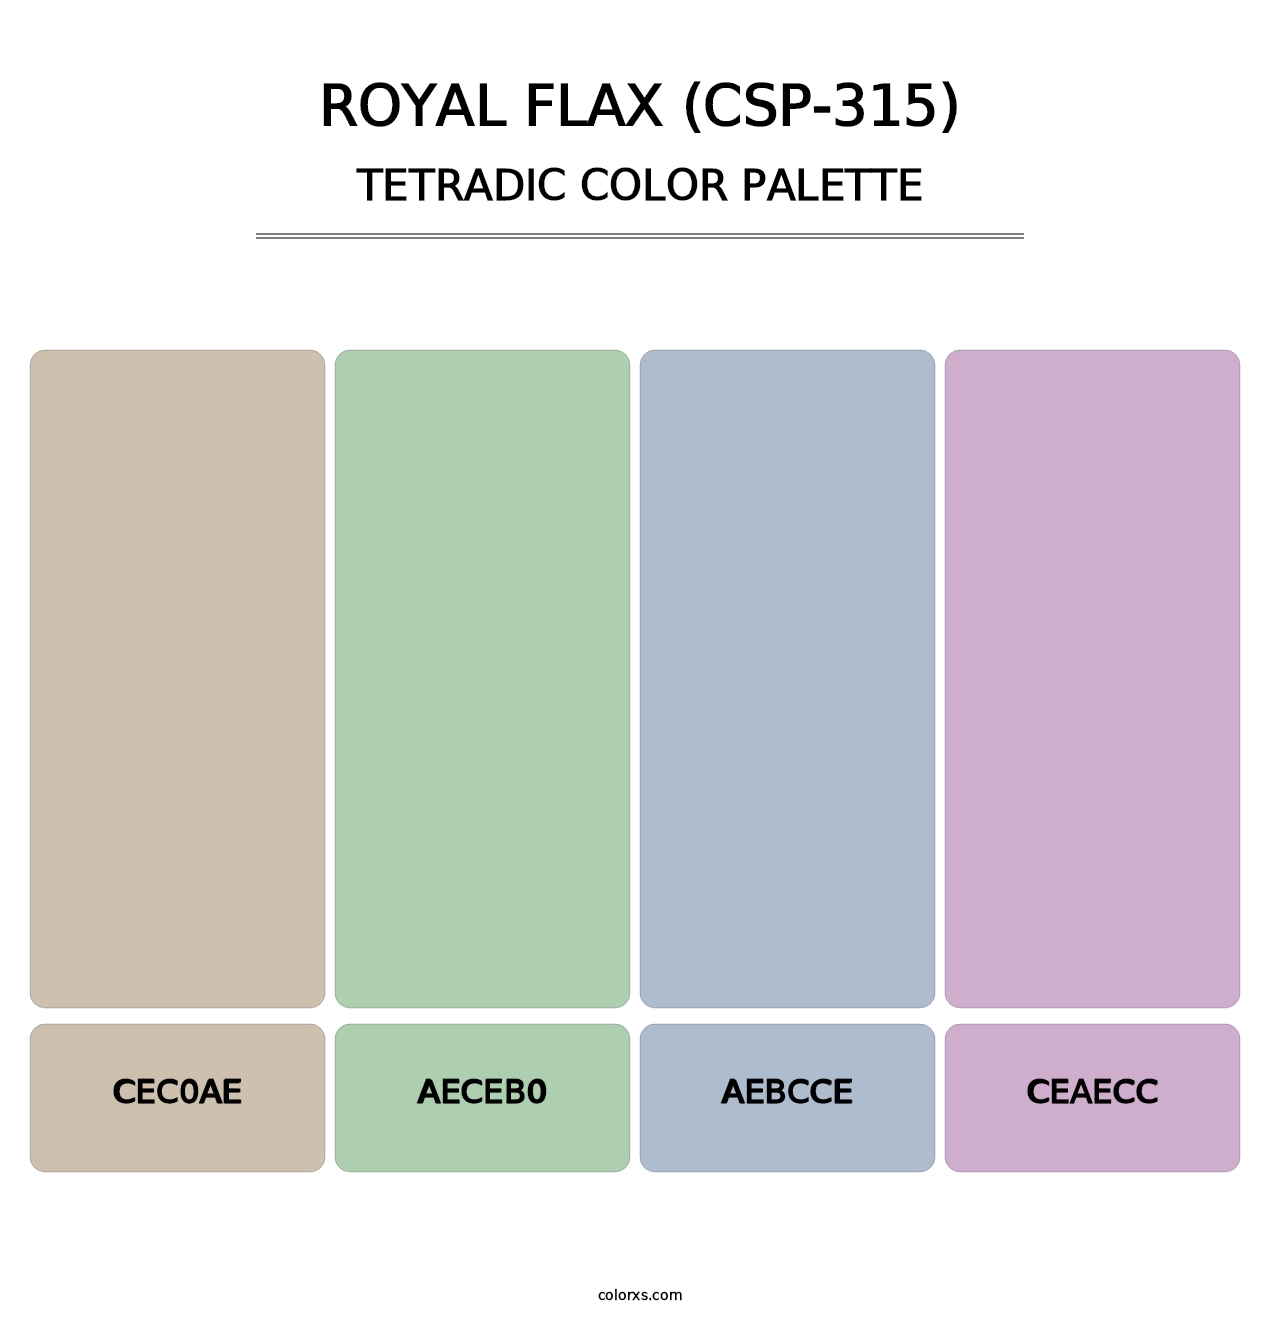 Royal Flax (CSP-315) - Tetradic Color Palette